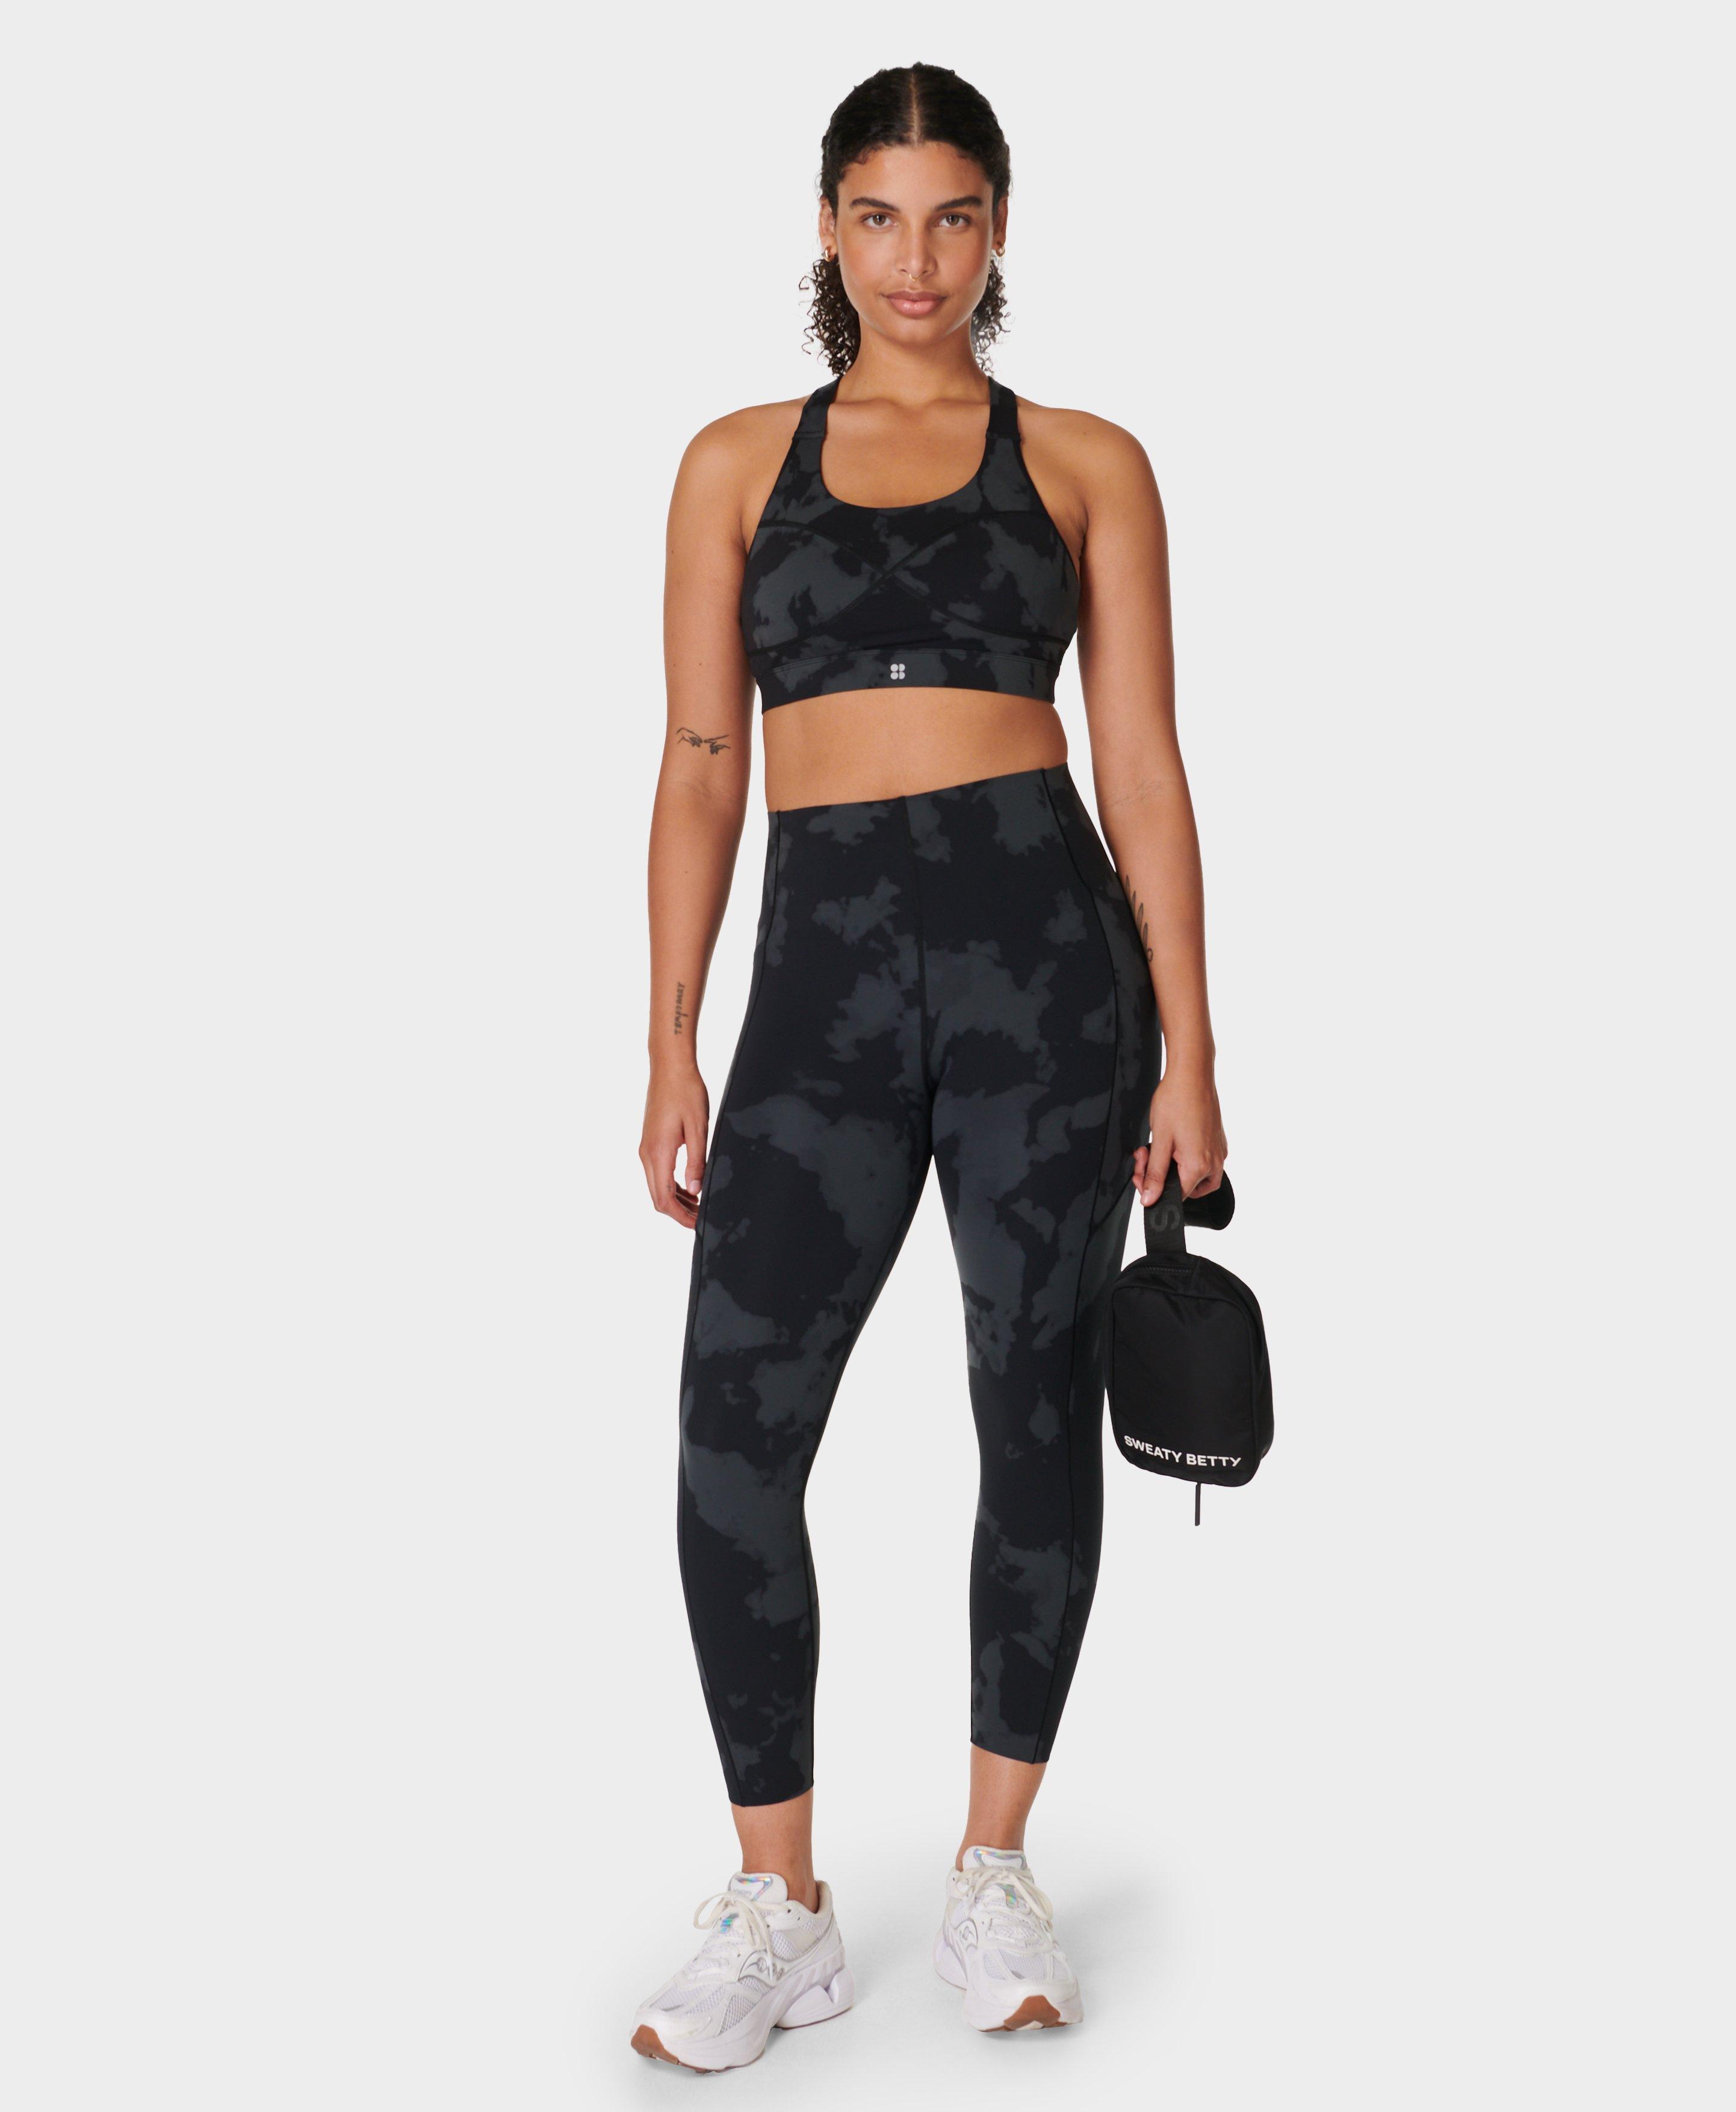 Sweaty Betty Black High Shine 7/8 Training Leggings - ShopStyle Activewear  Trousers